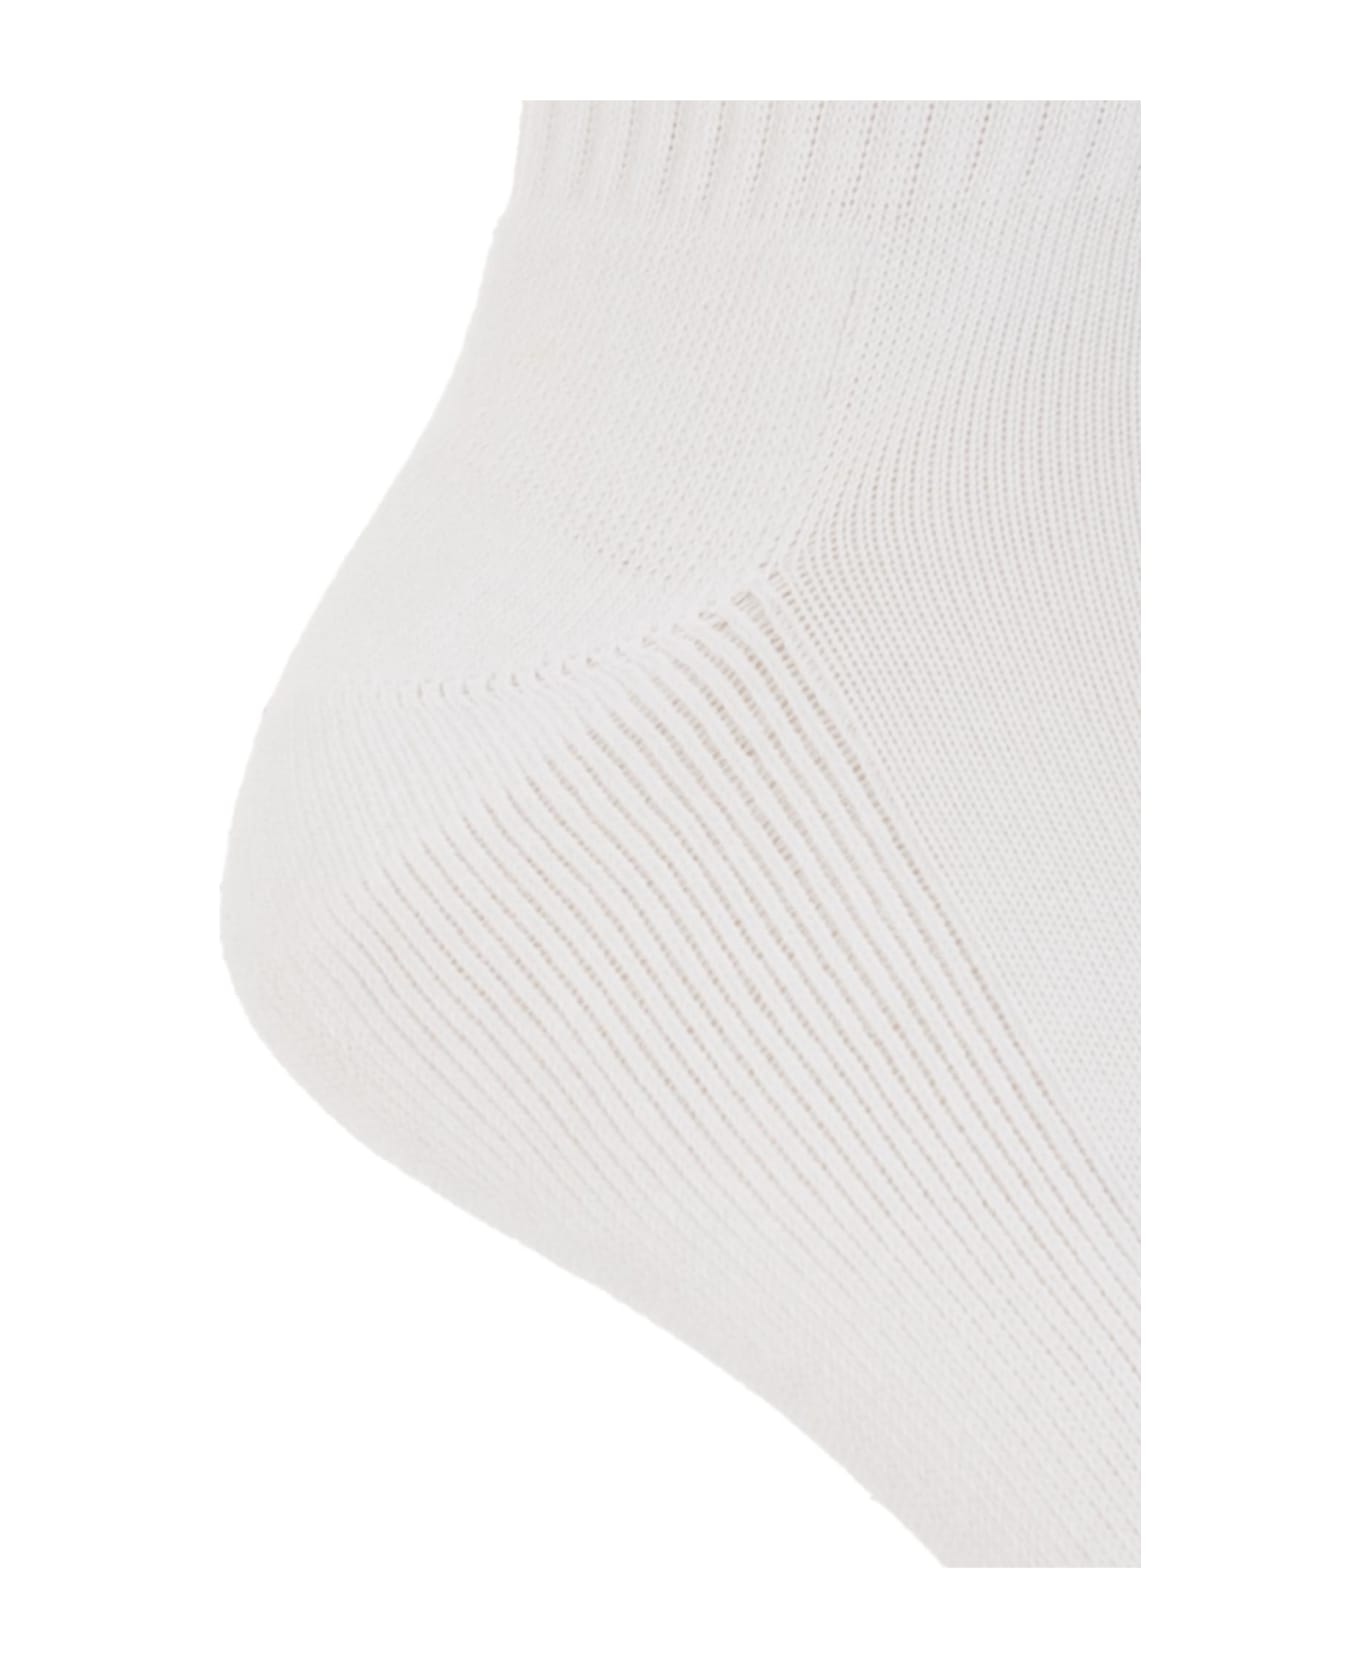 Balenciaga Branded Socks - WHITE 靴下